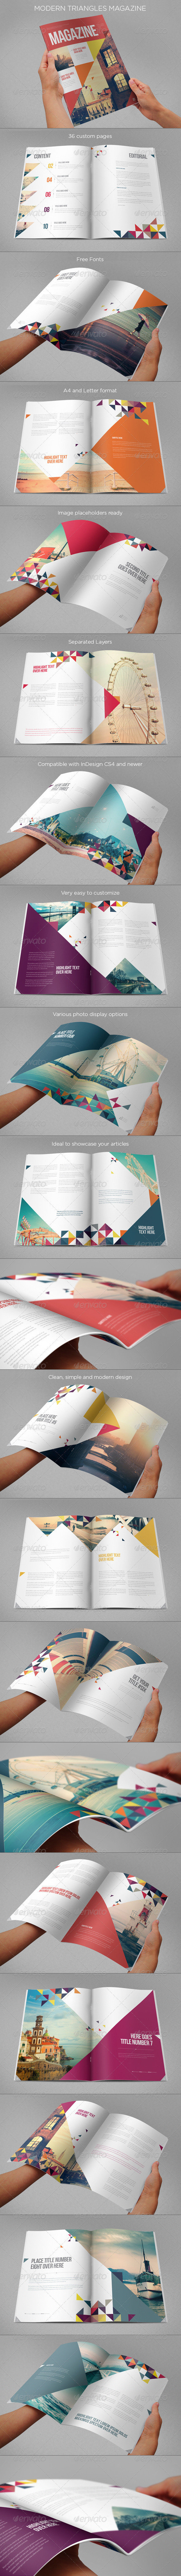 Modern Triangles Magazine - Magazines Print Templates #layout #magazine